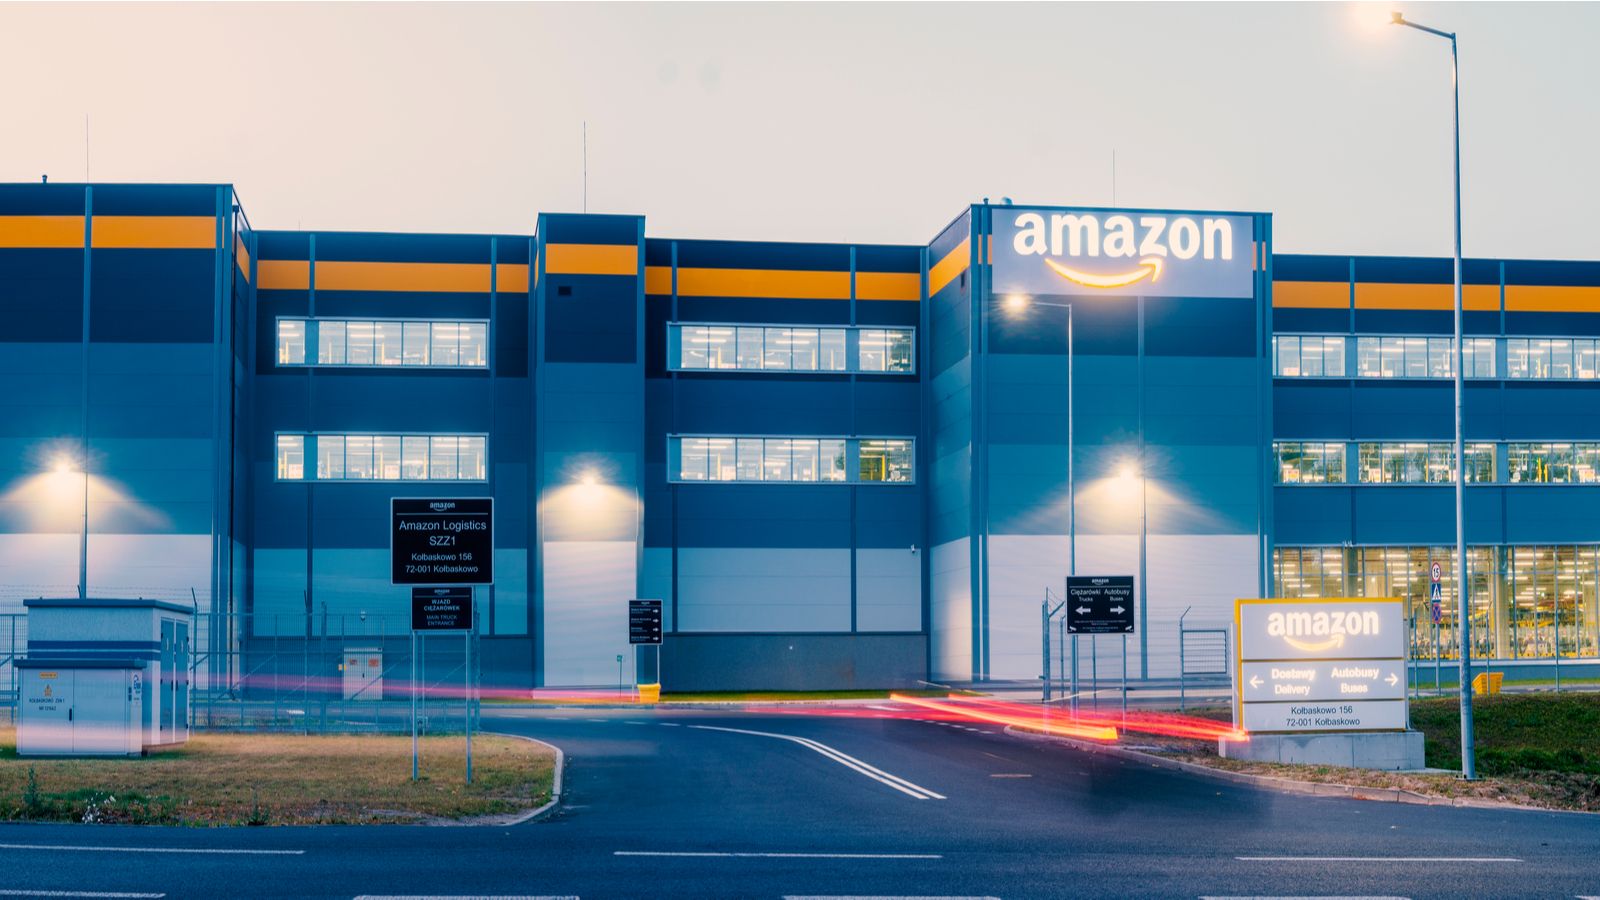 Amazon (AMZN) logistics center in Szczecin, Poland.